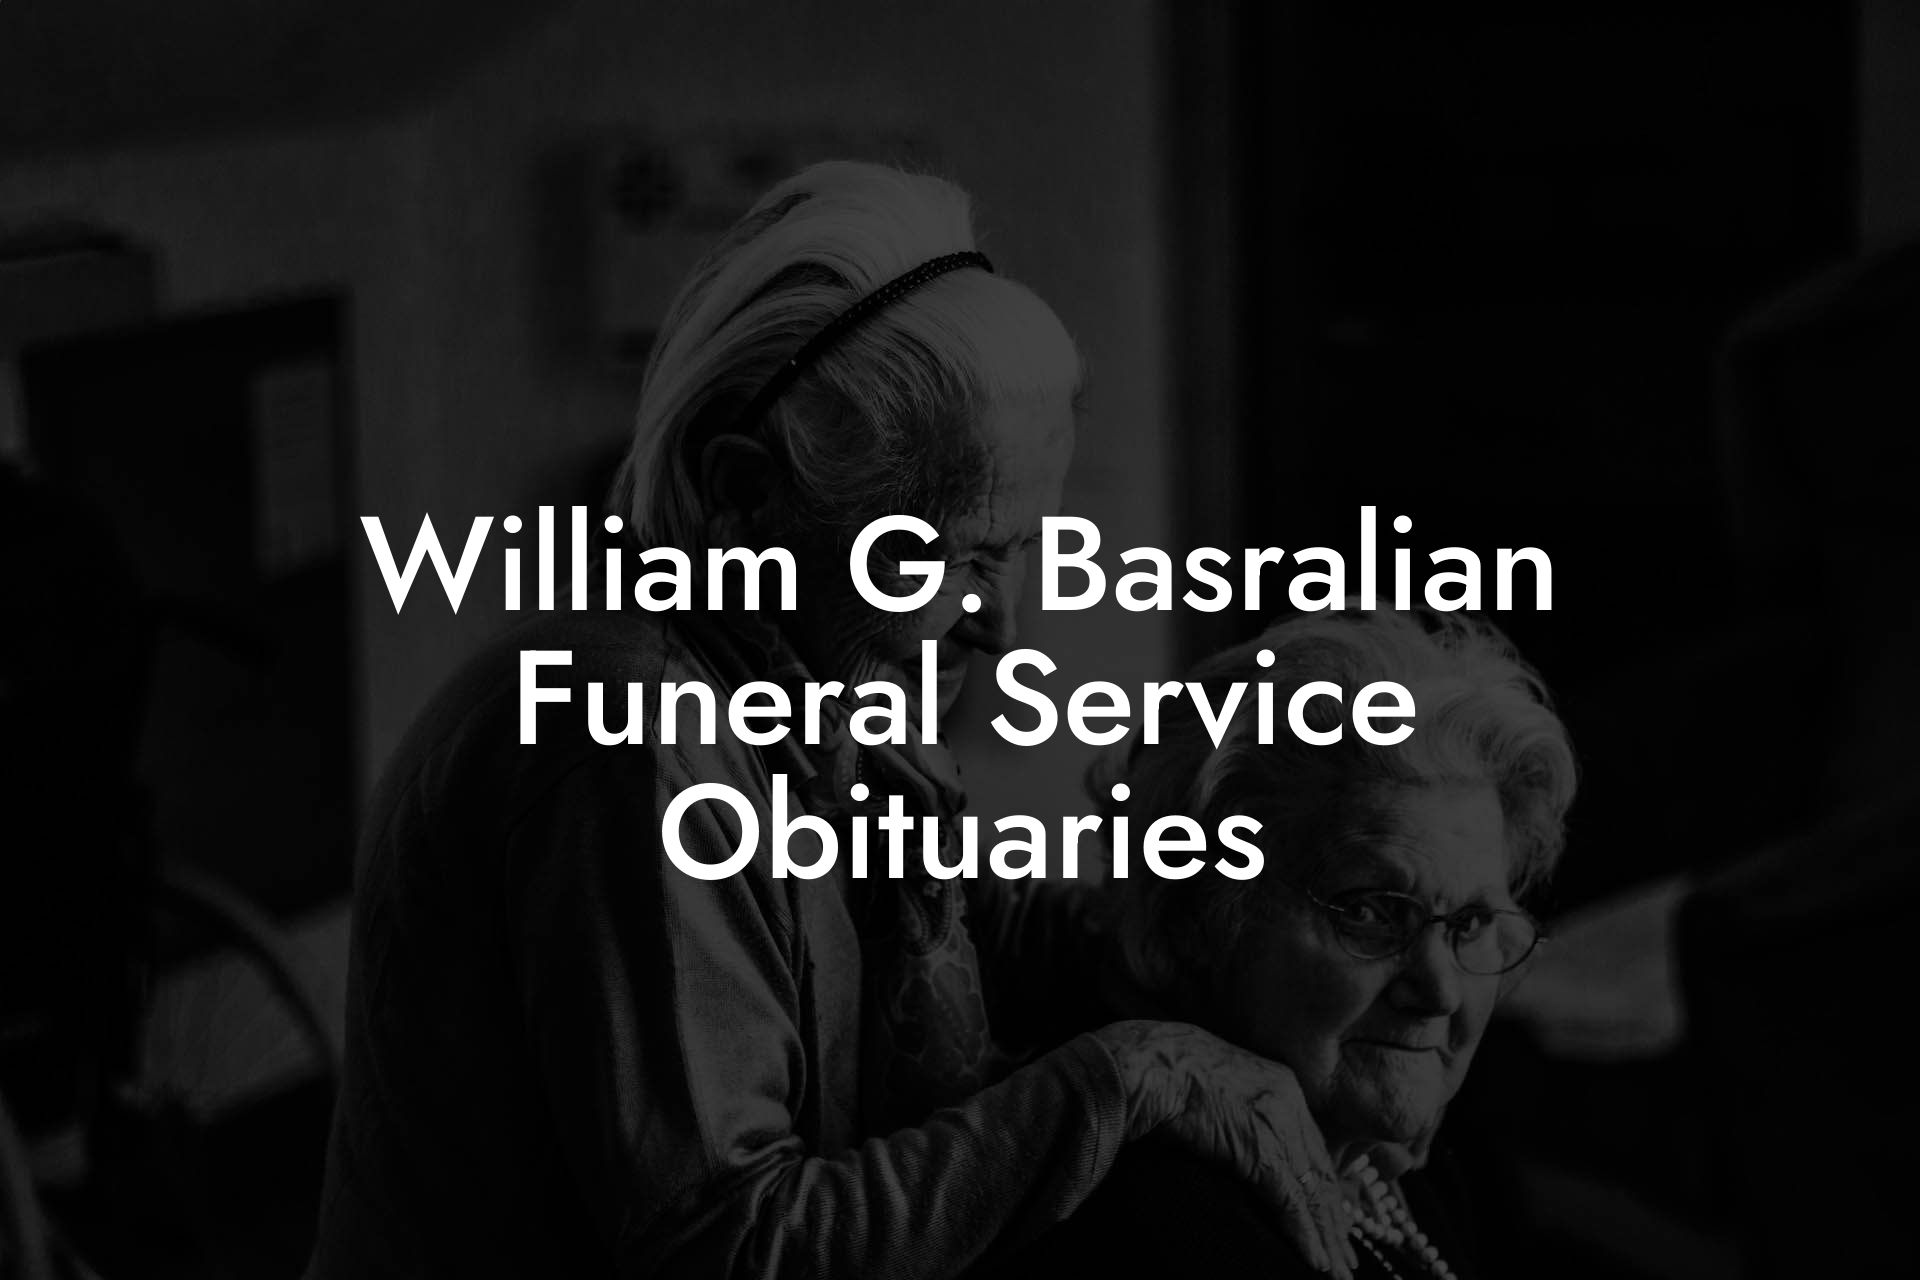 William G. Basralian Funeral Service Obituaries